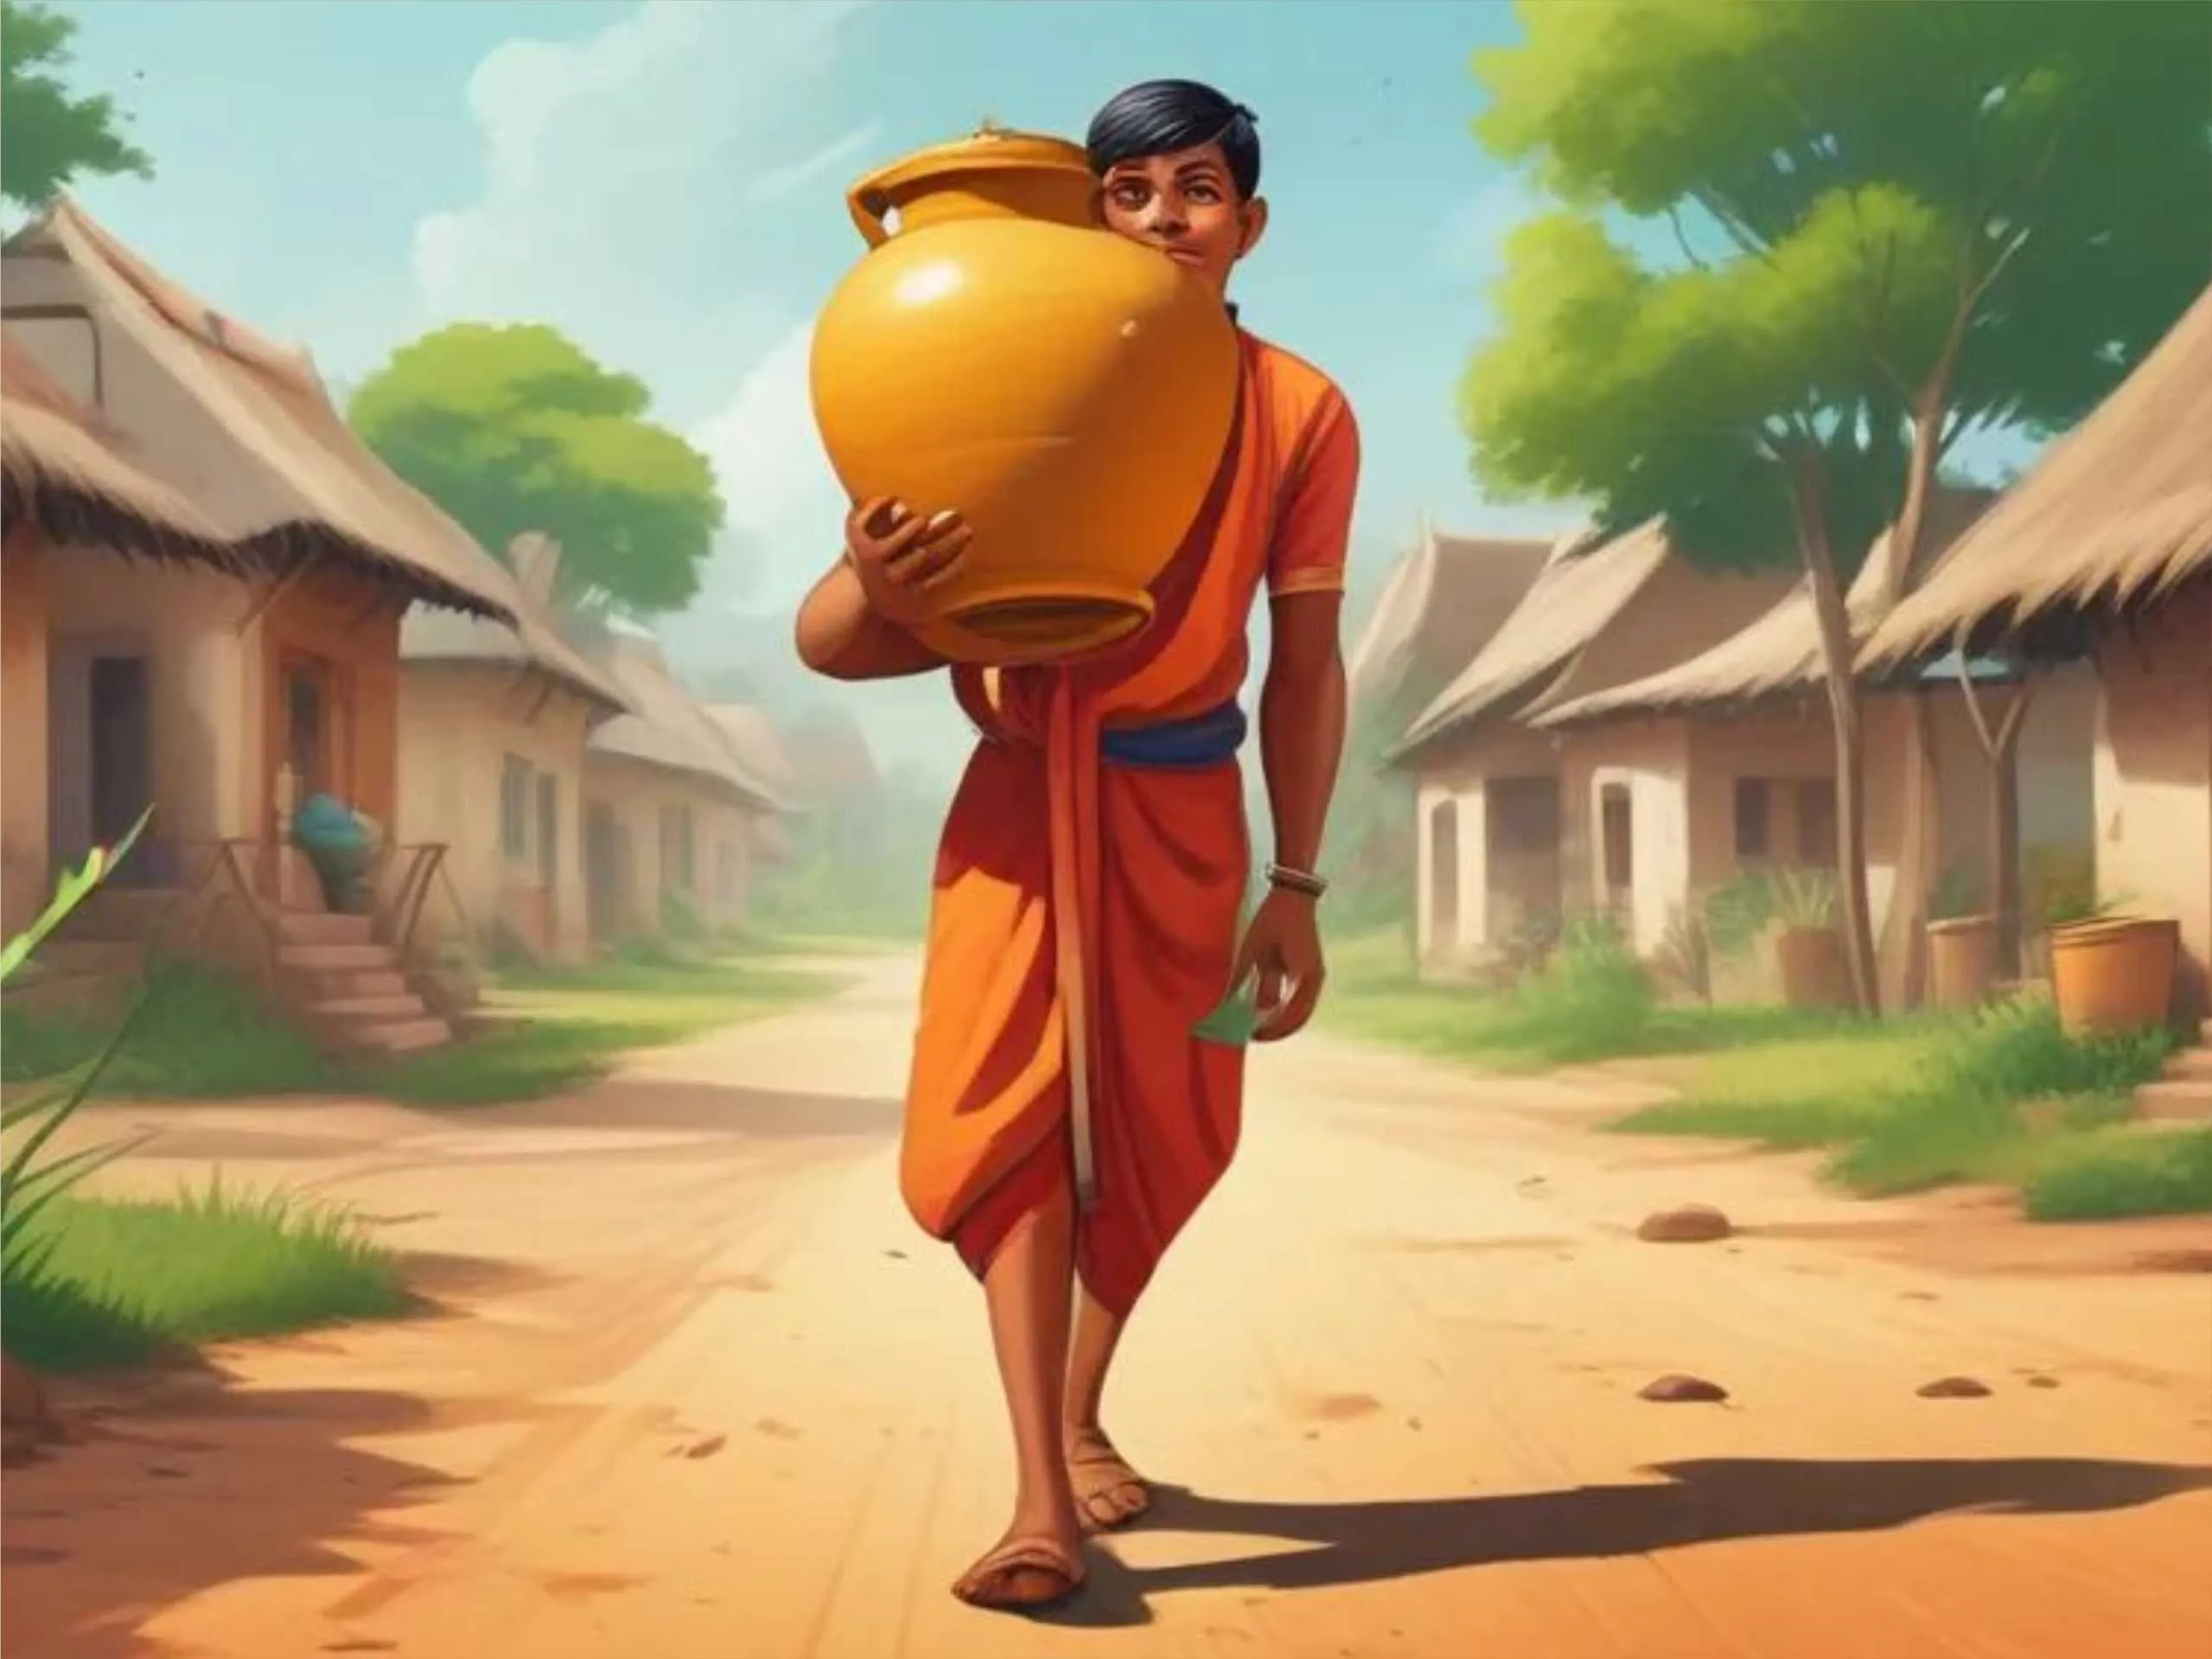 Cartoon image of an indian village boy